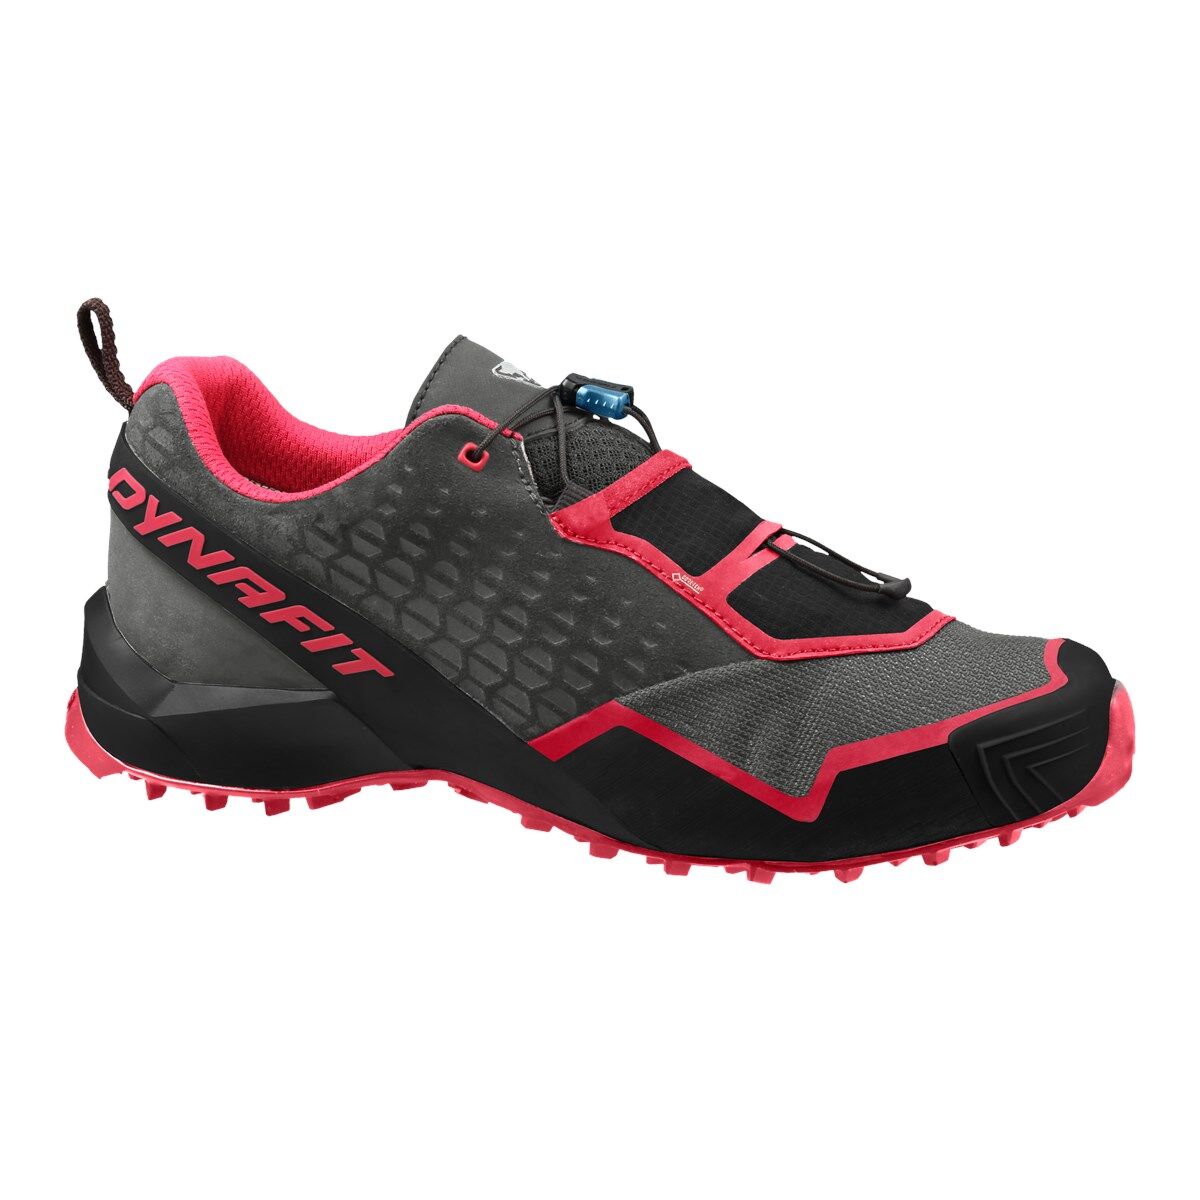 Dynafit - Speed MTN GTX W - Trail Running shoes - Women's